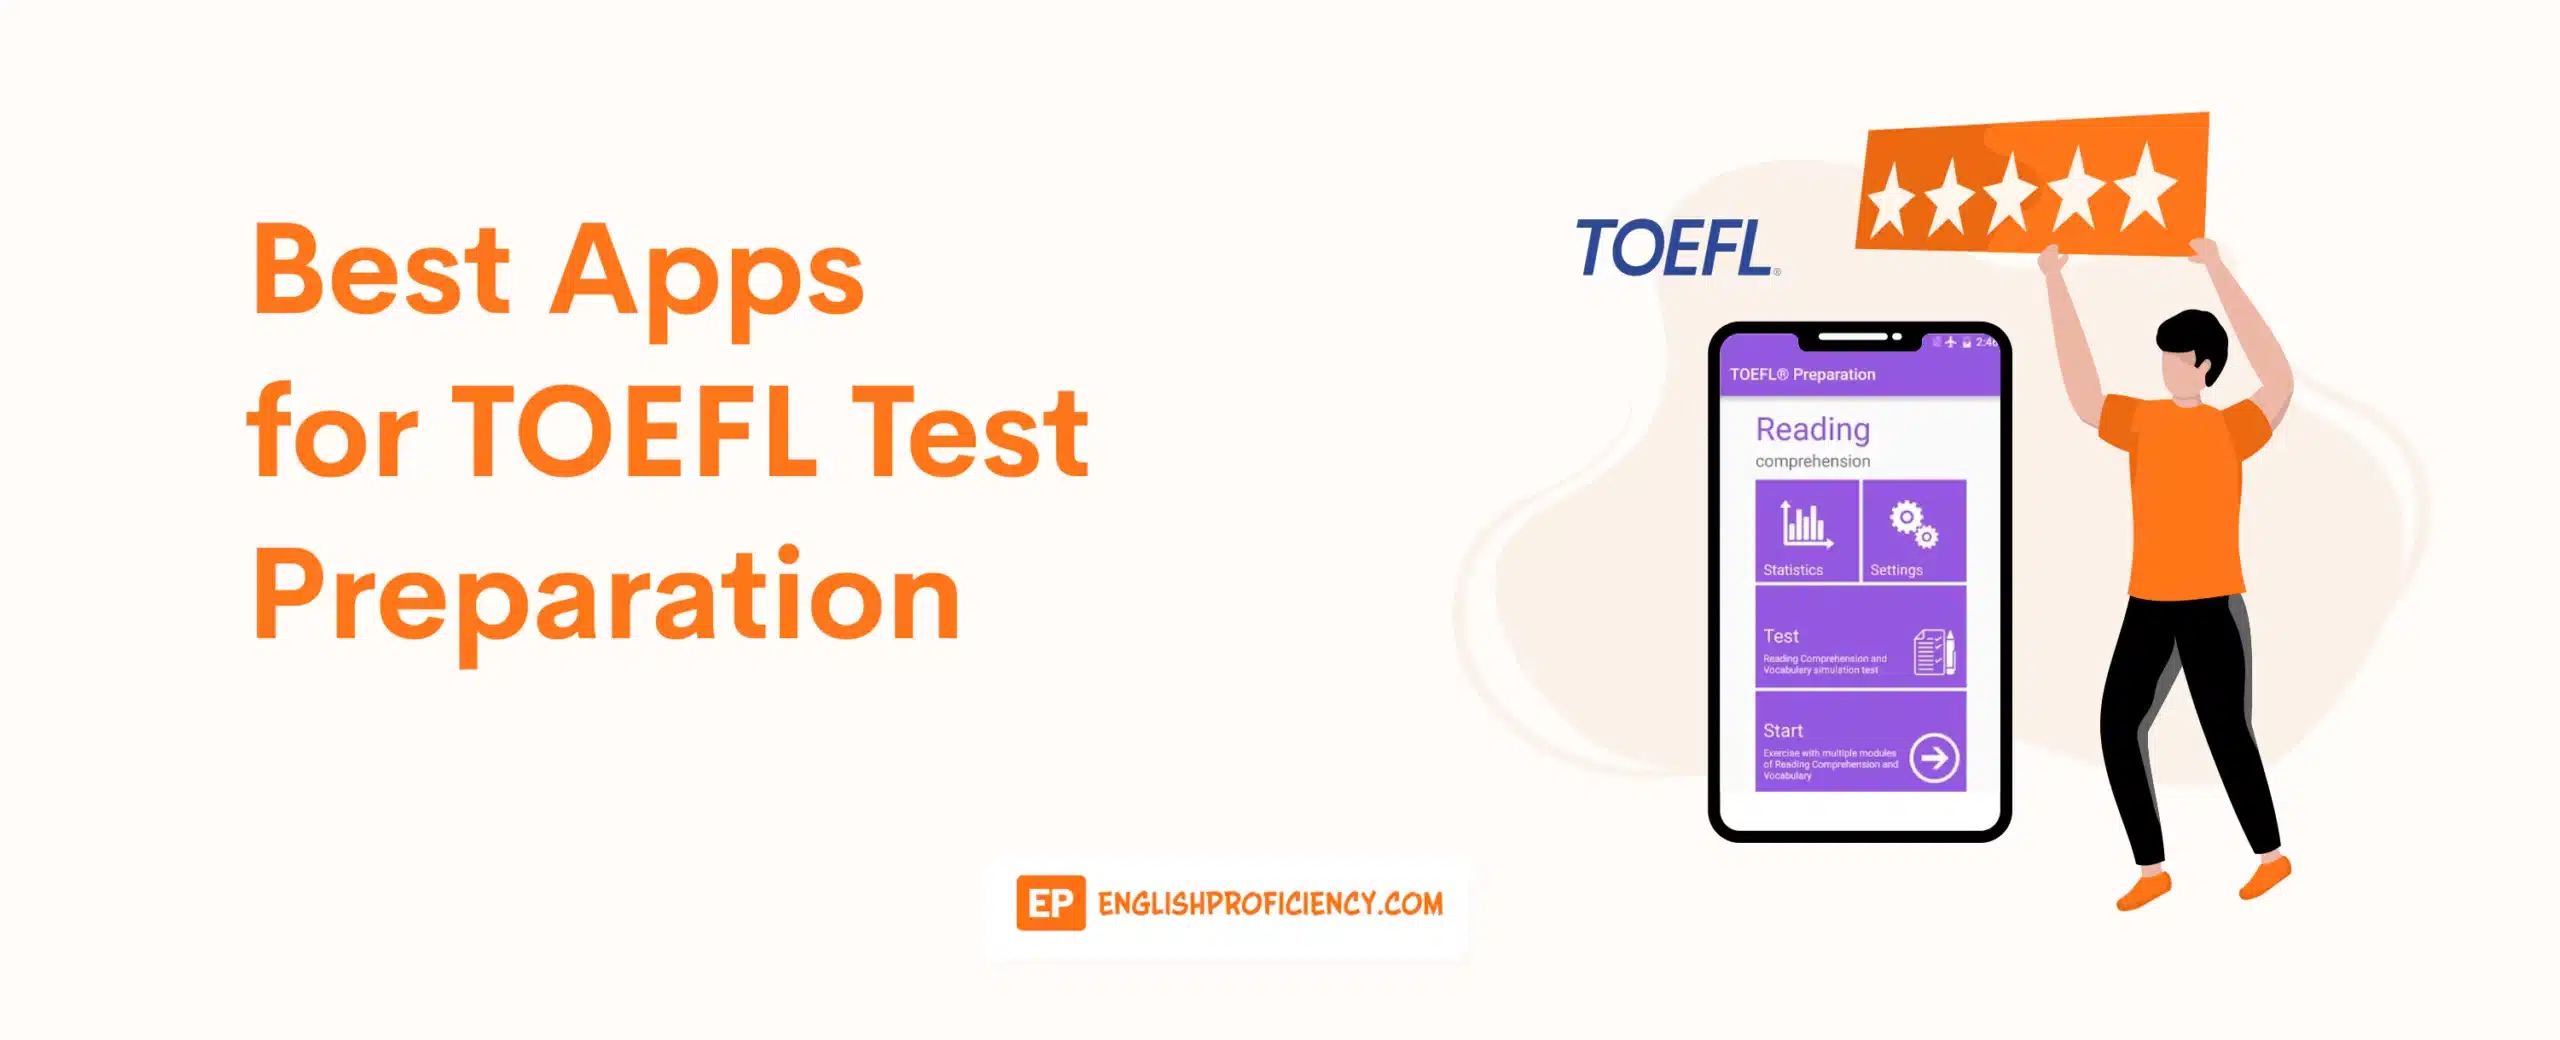 Best Apps for TOEFL Test Preparation